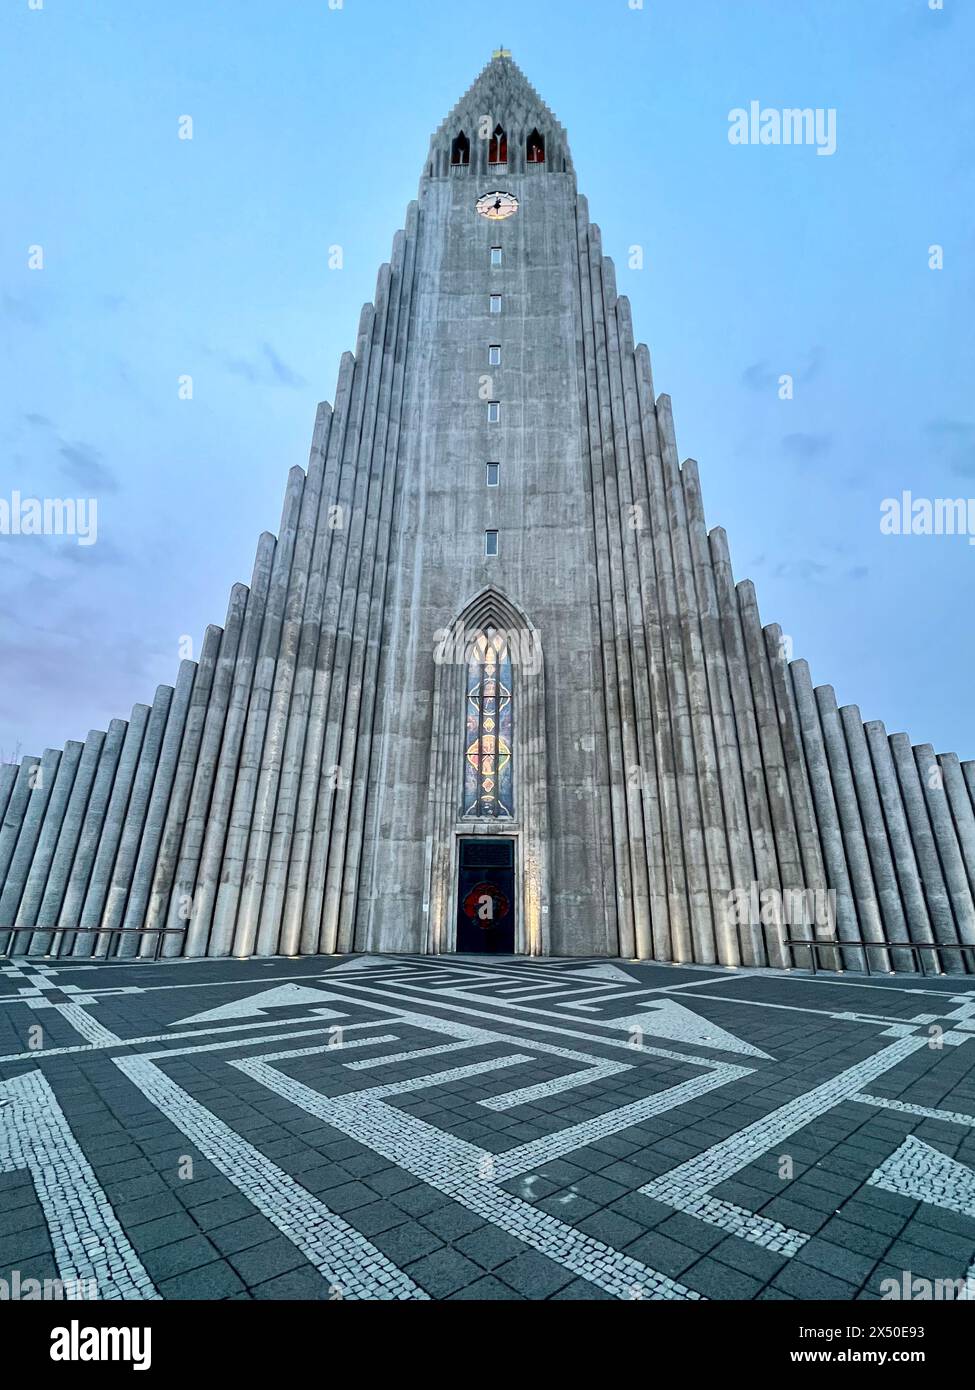 Ingresso alla Chiesa di Hallgrimur (Hallgrimskirkja) all'alba, Reykjavik, Islanda Foto Stock